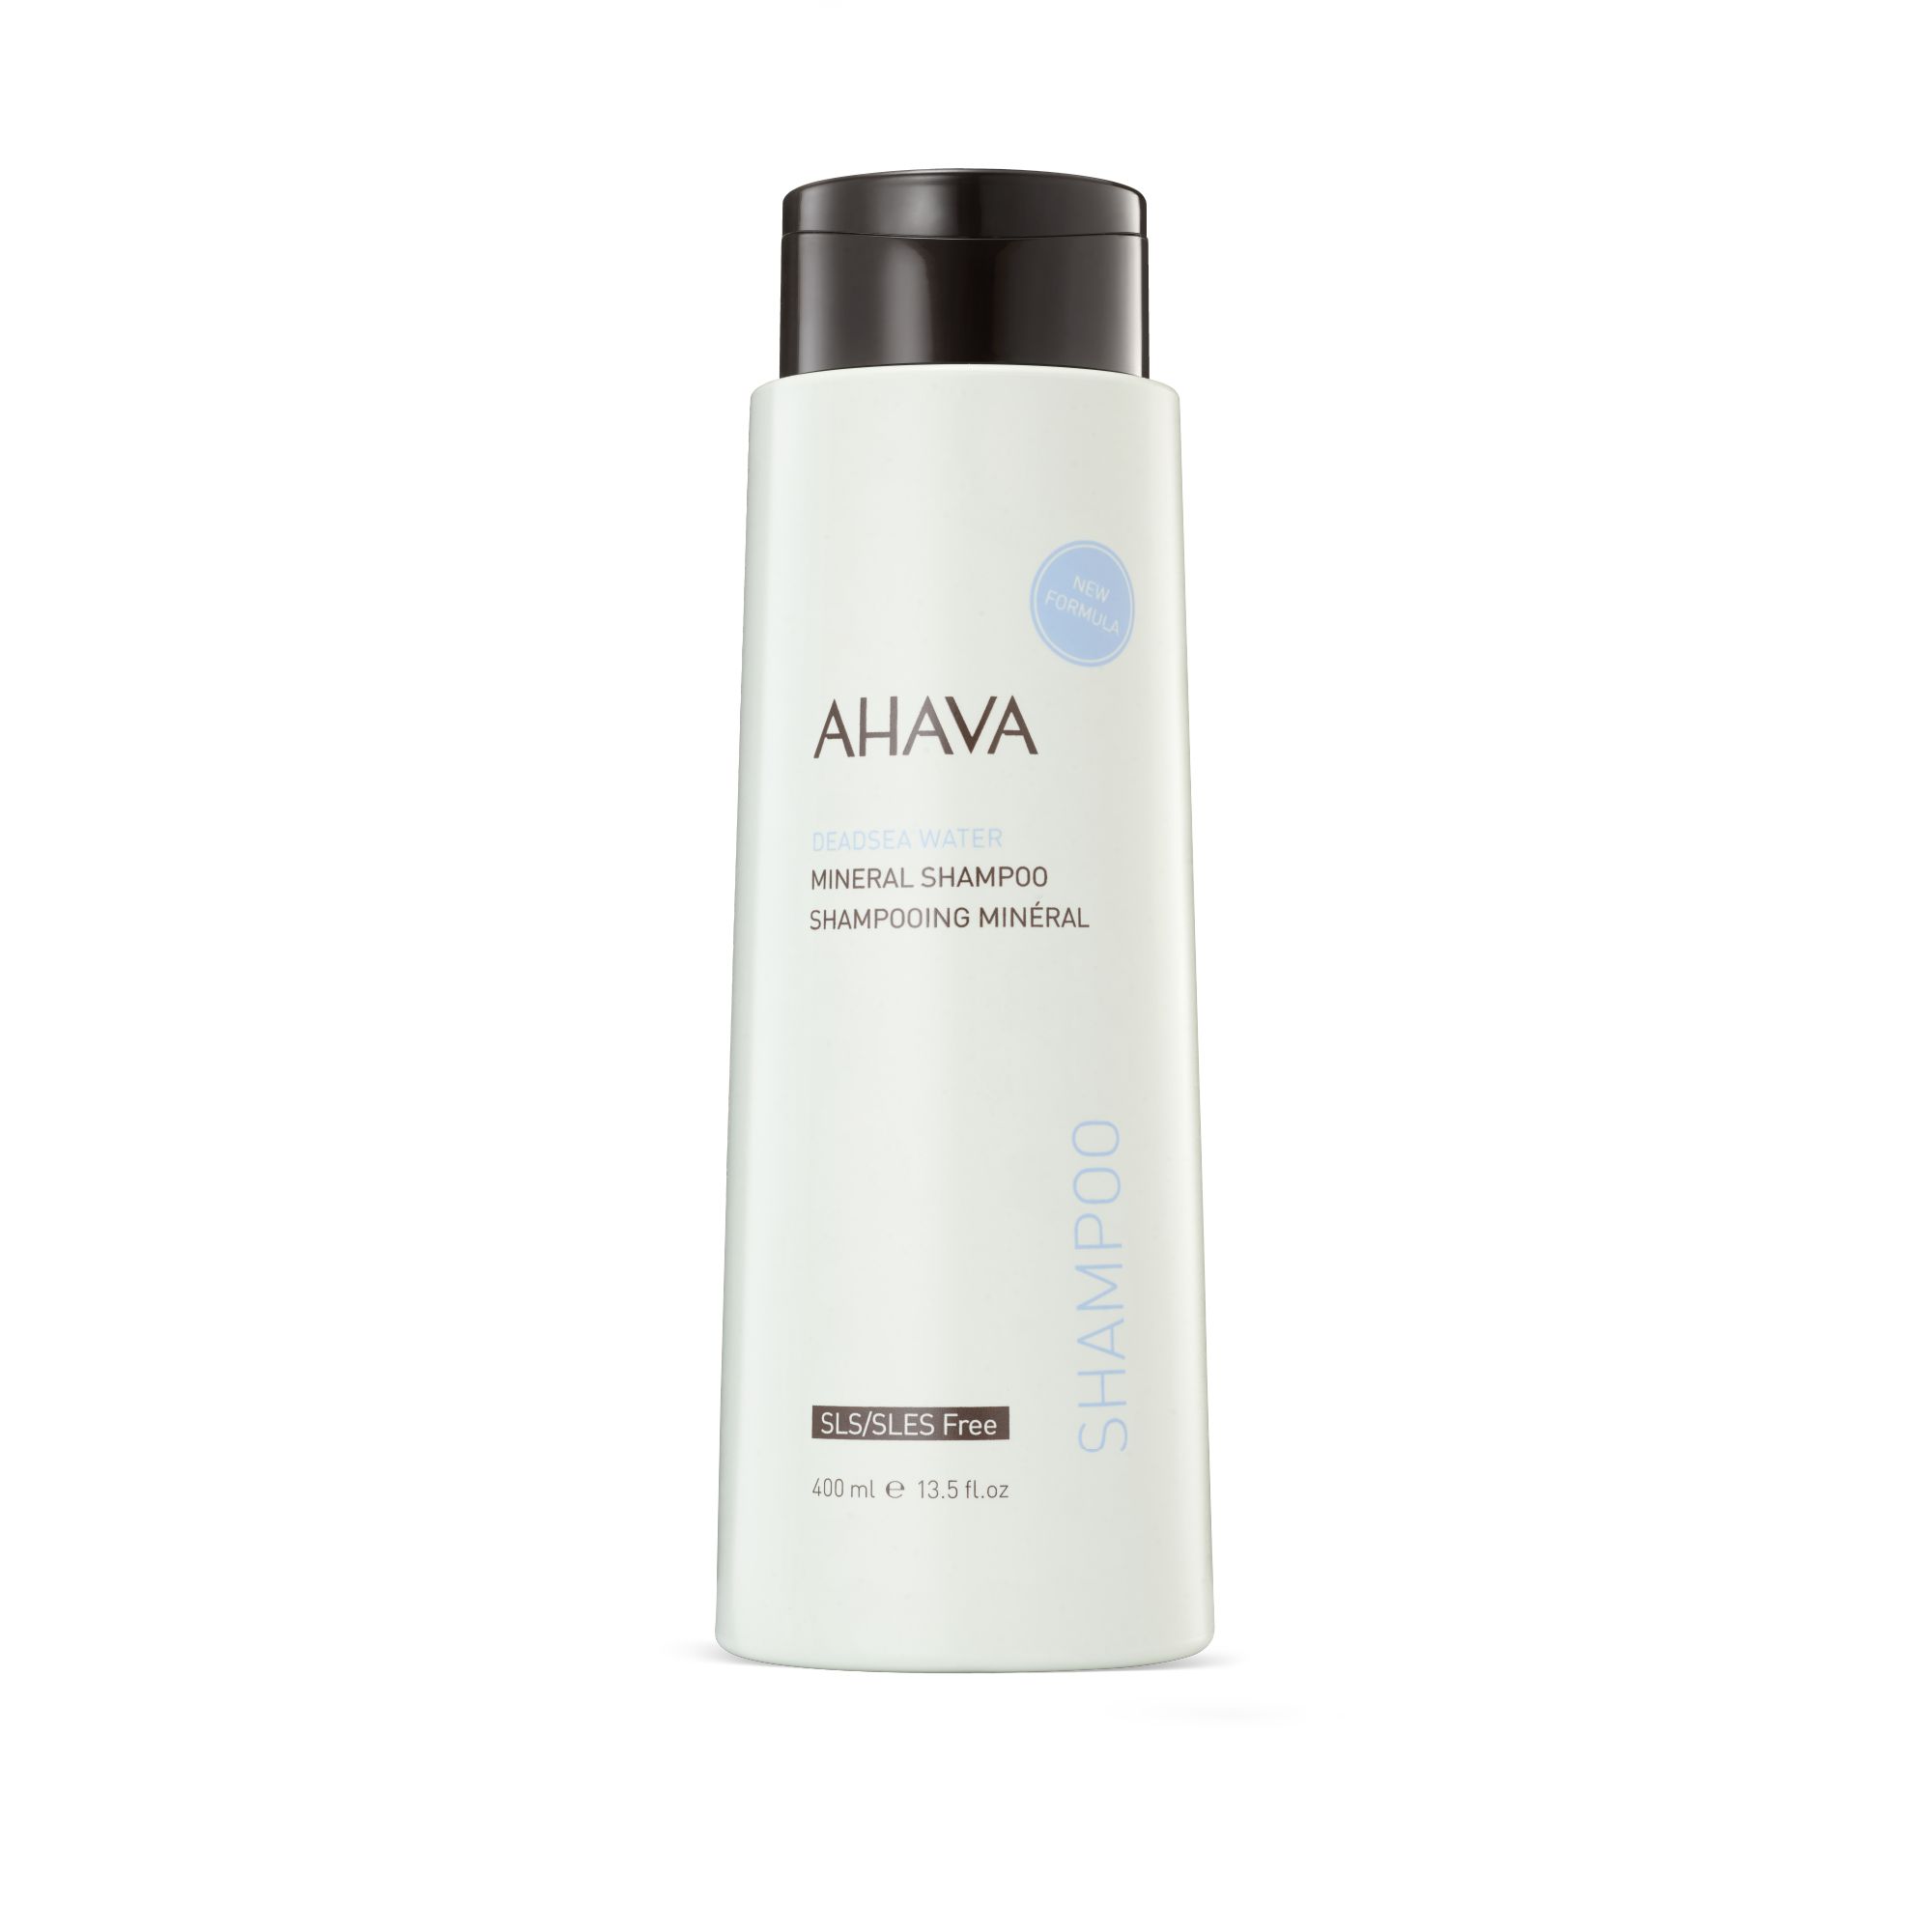 AHAVA DEADSEA WATER Mineral Shampoo